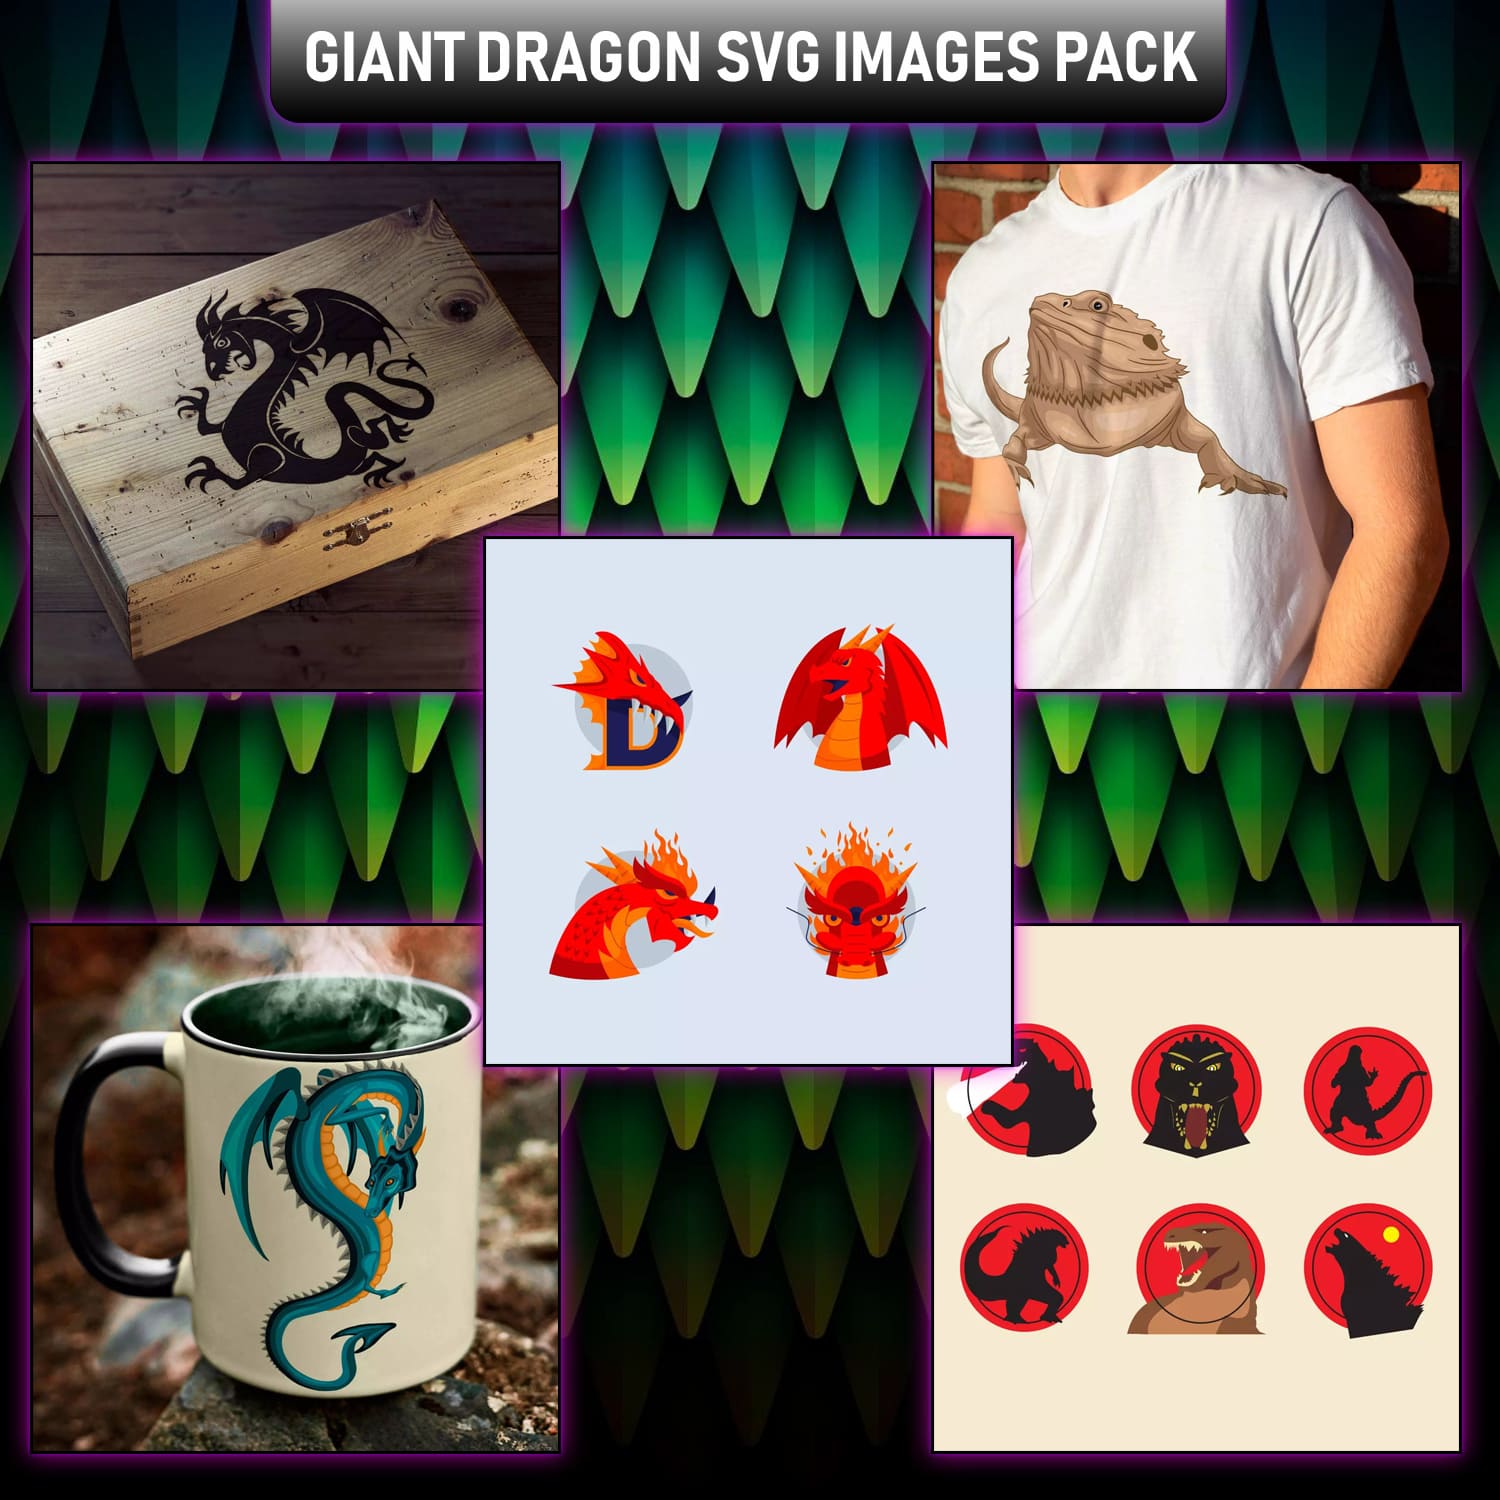 Giant Dragon SVG Design Images Pack cover image.